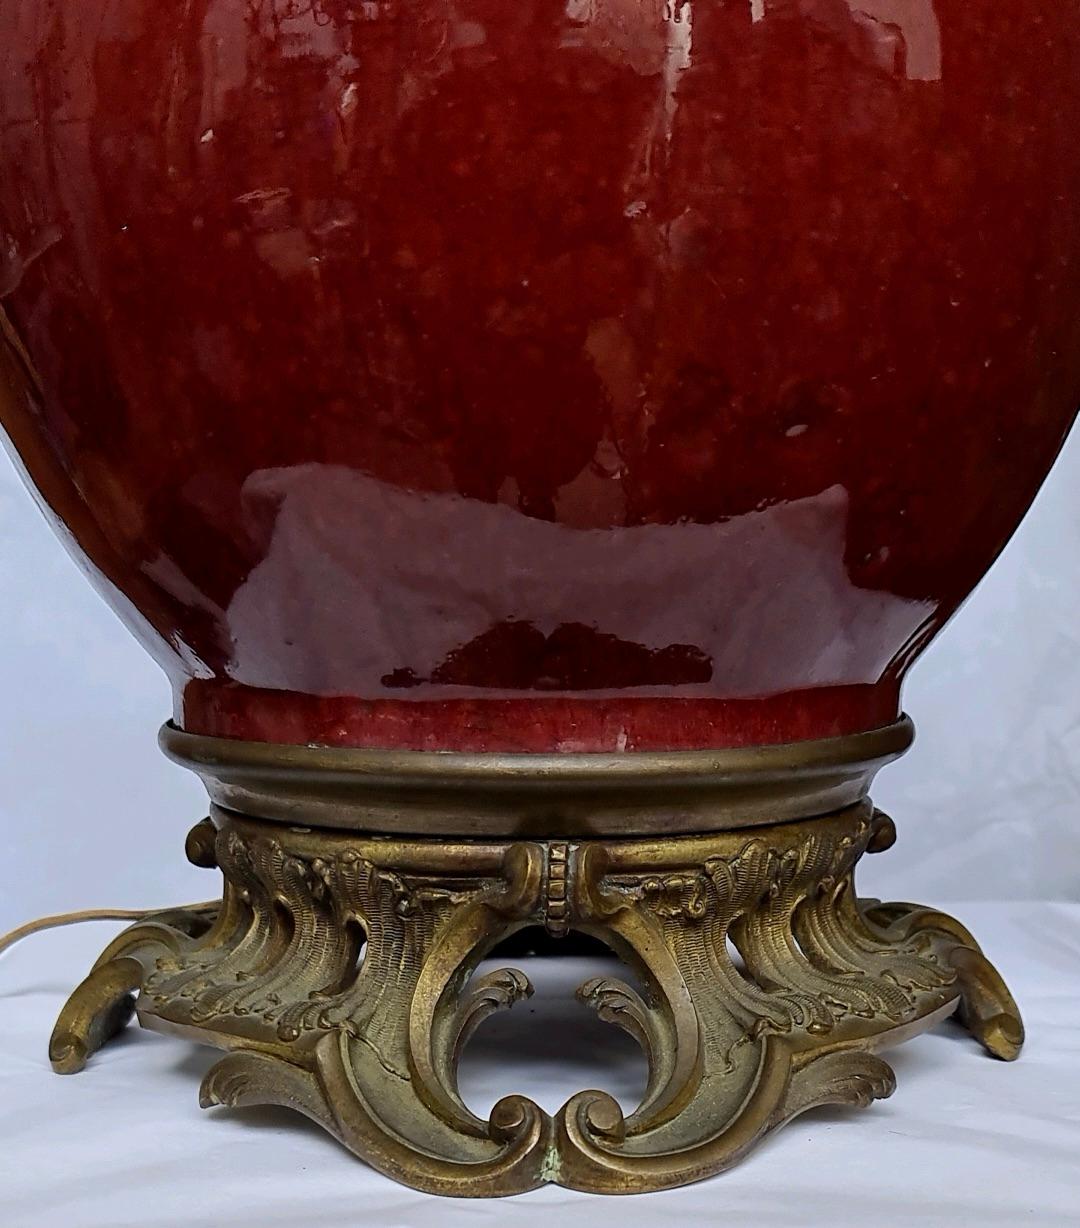 Enameled 19th Century Chinese Porcelain Vase Ormolu-Mounted in Lamp